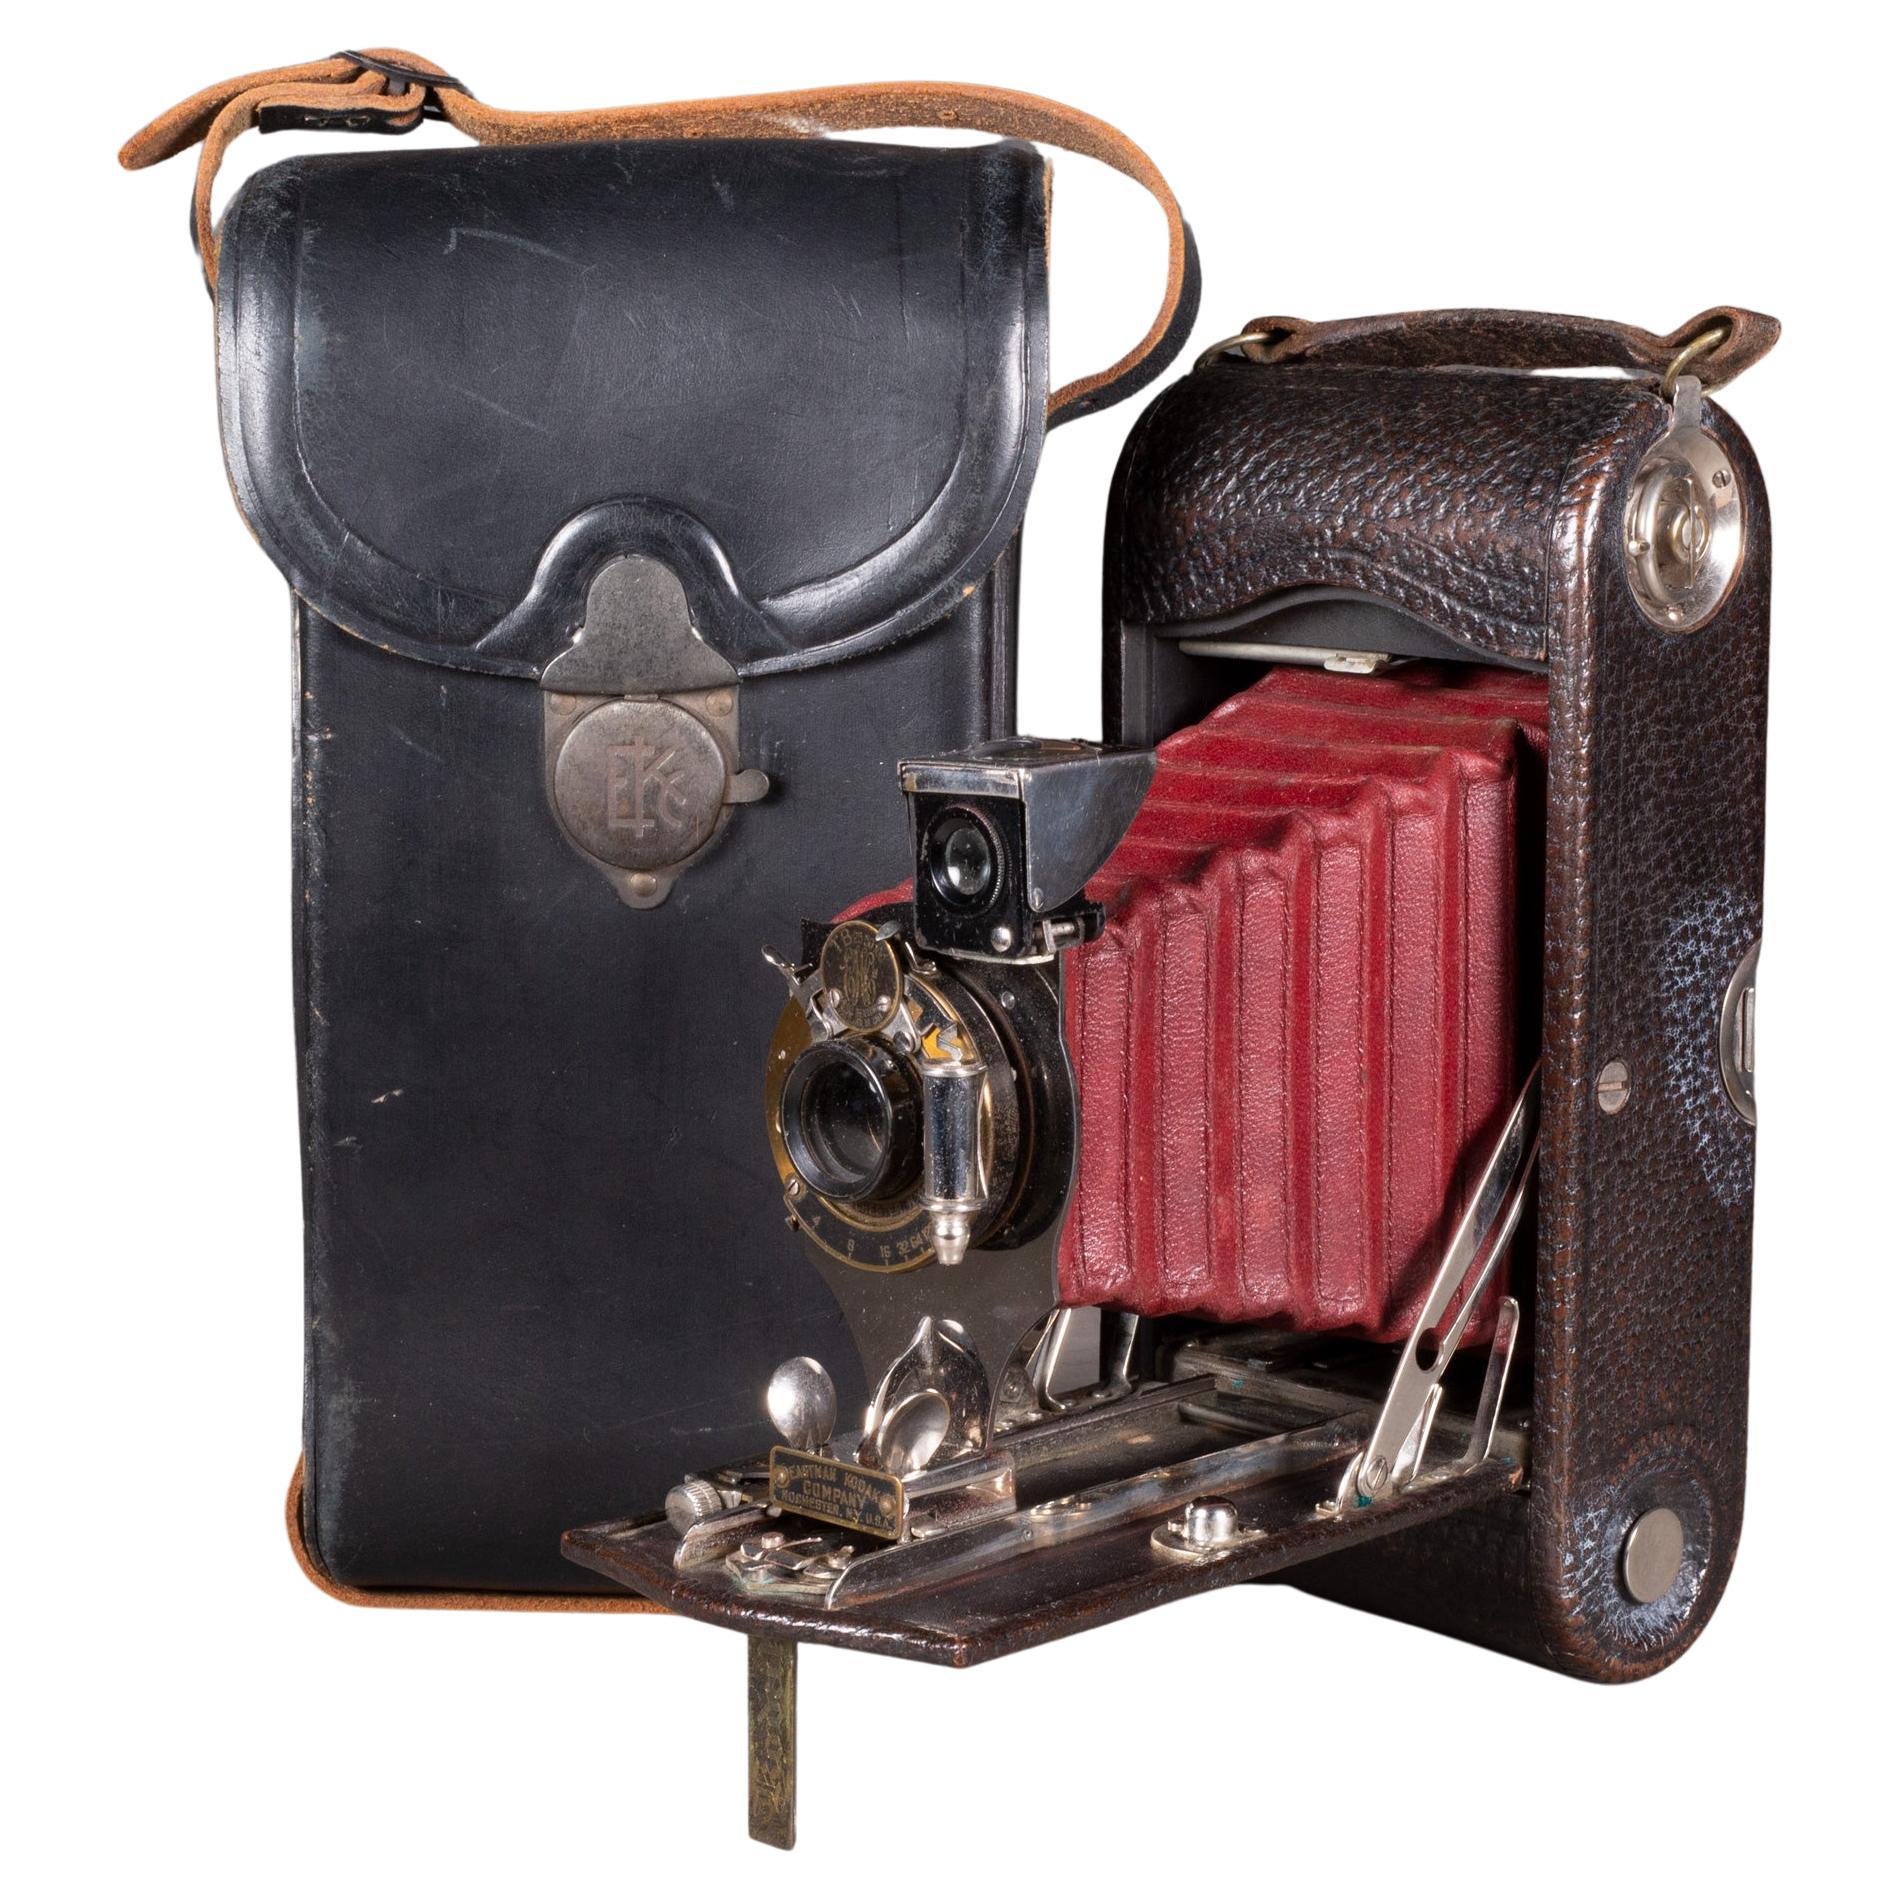 Große Kodak No. 2C Klappbare Tasche Kamera/Lederetui c.1914 (FREE SHIPPING)